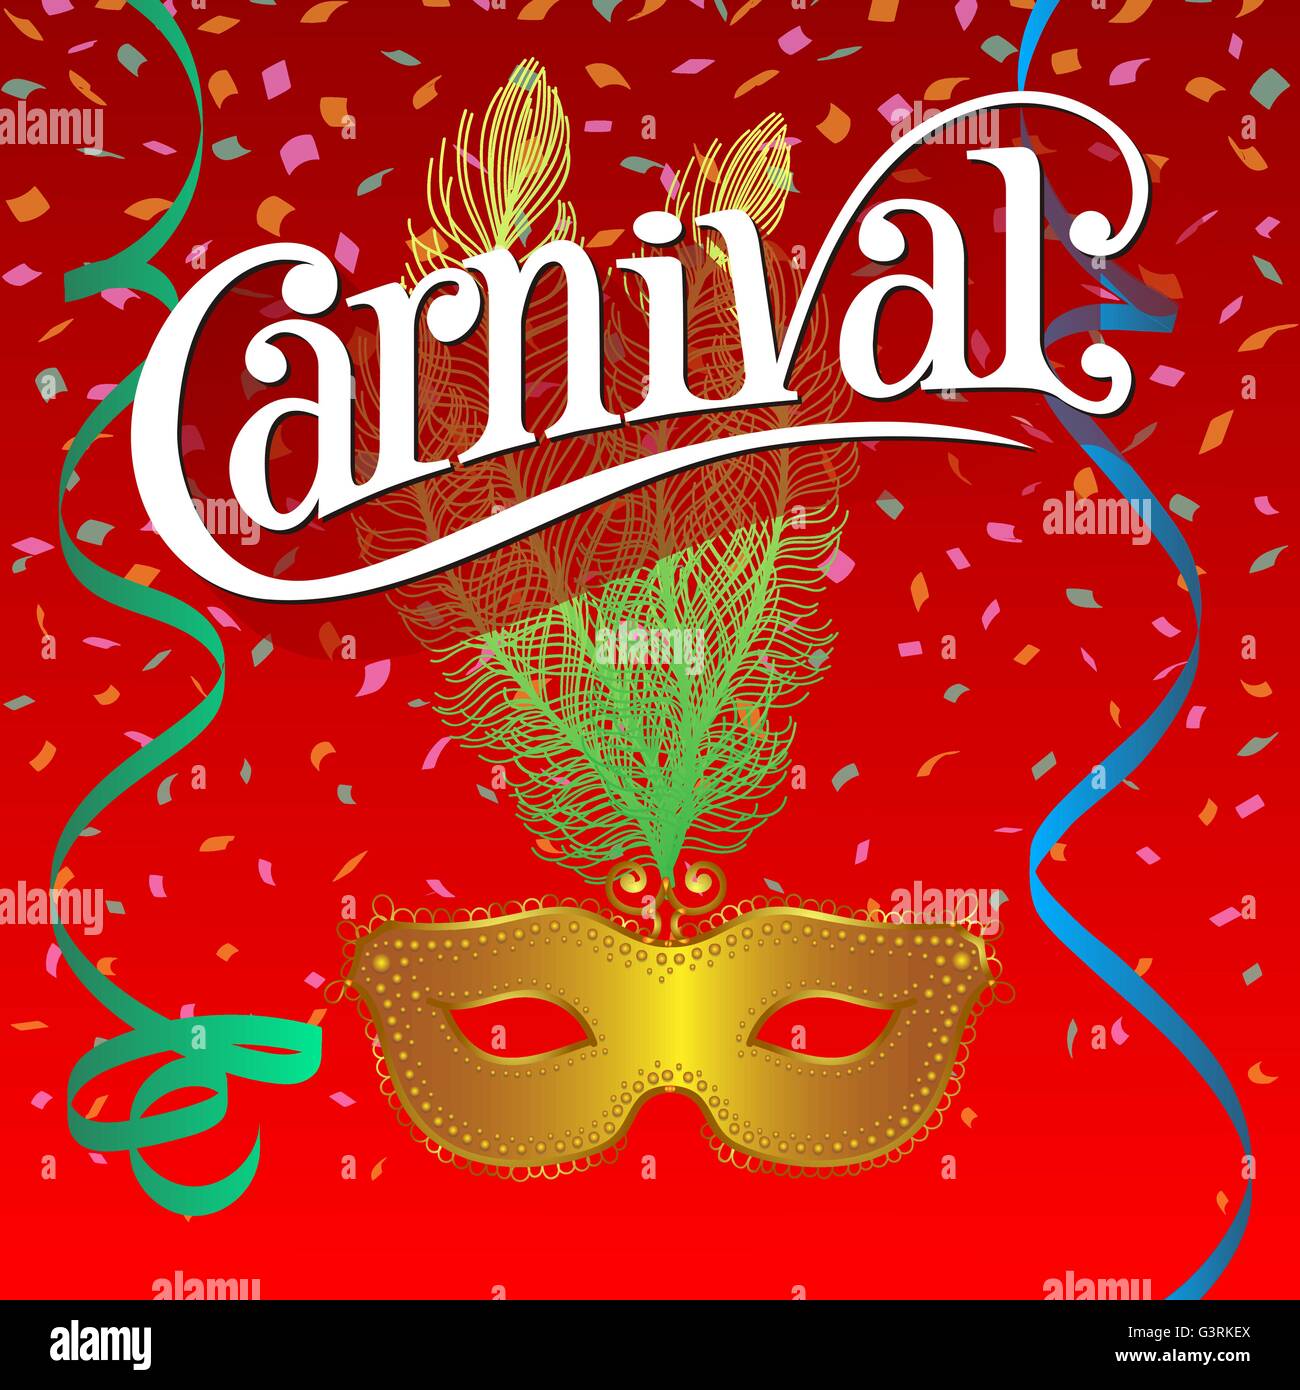 Carnival Illustration Stock Vector